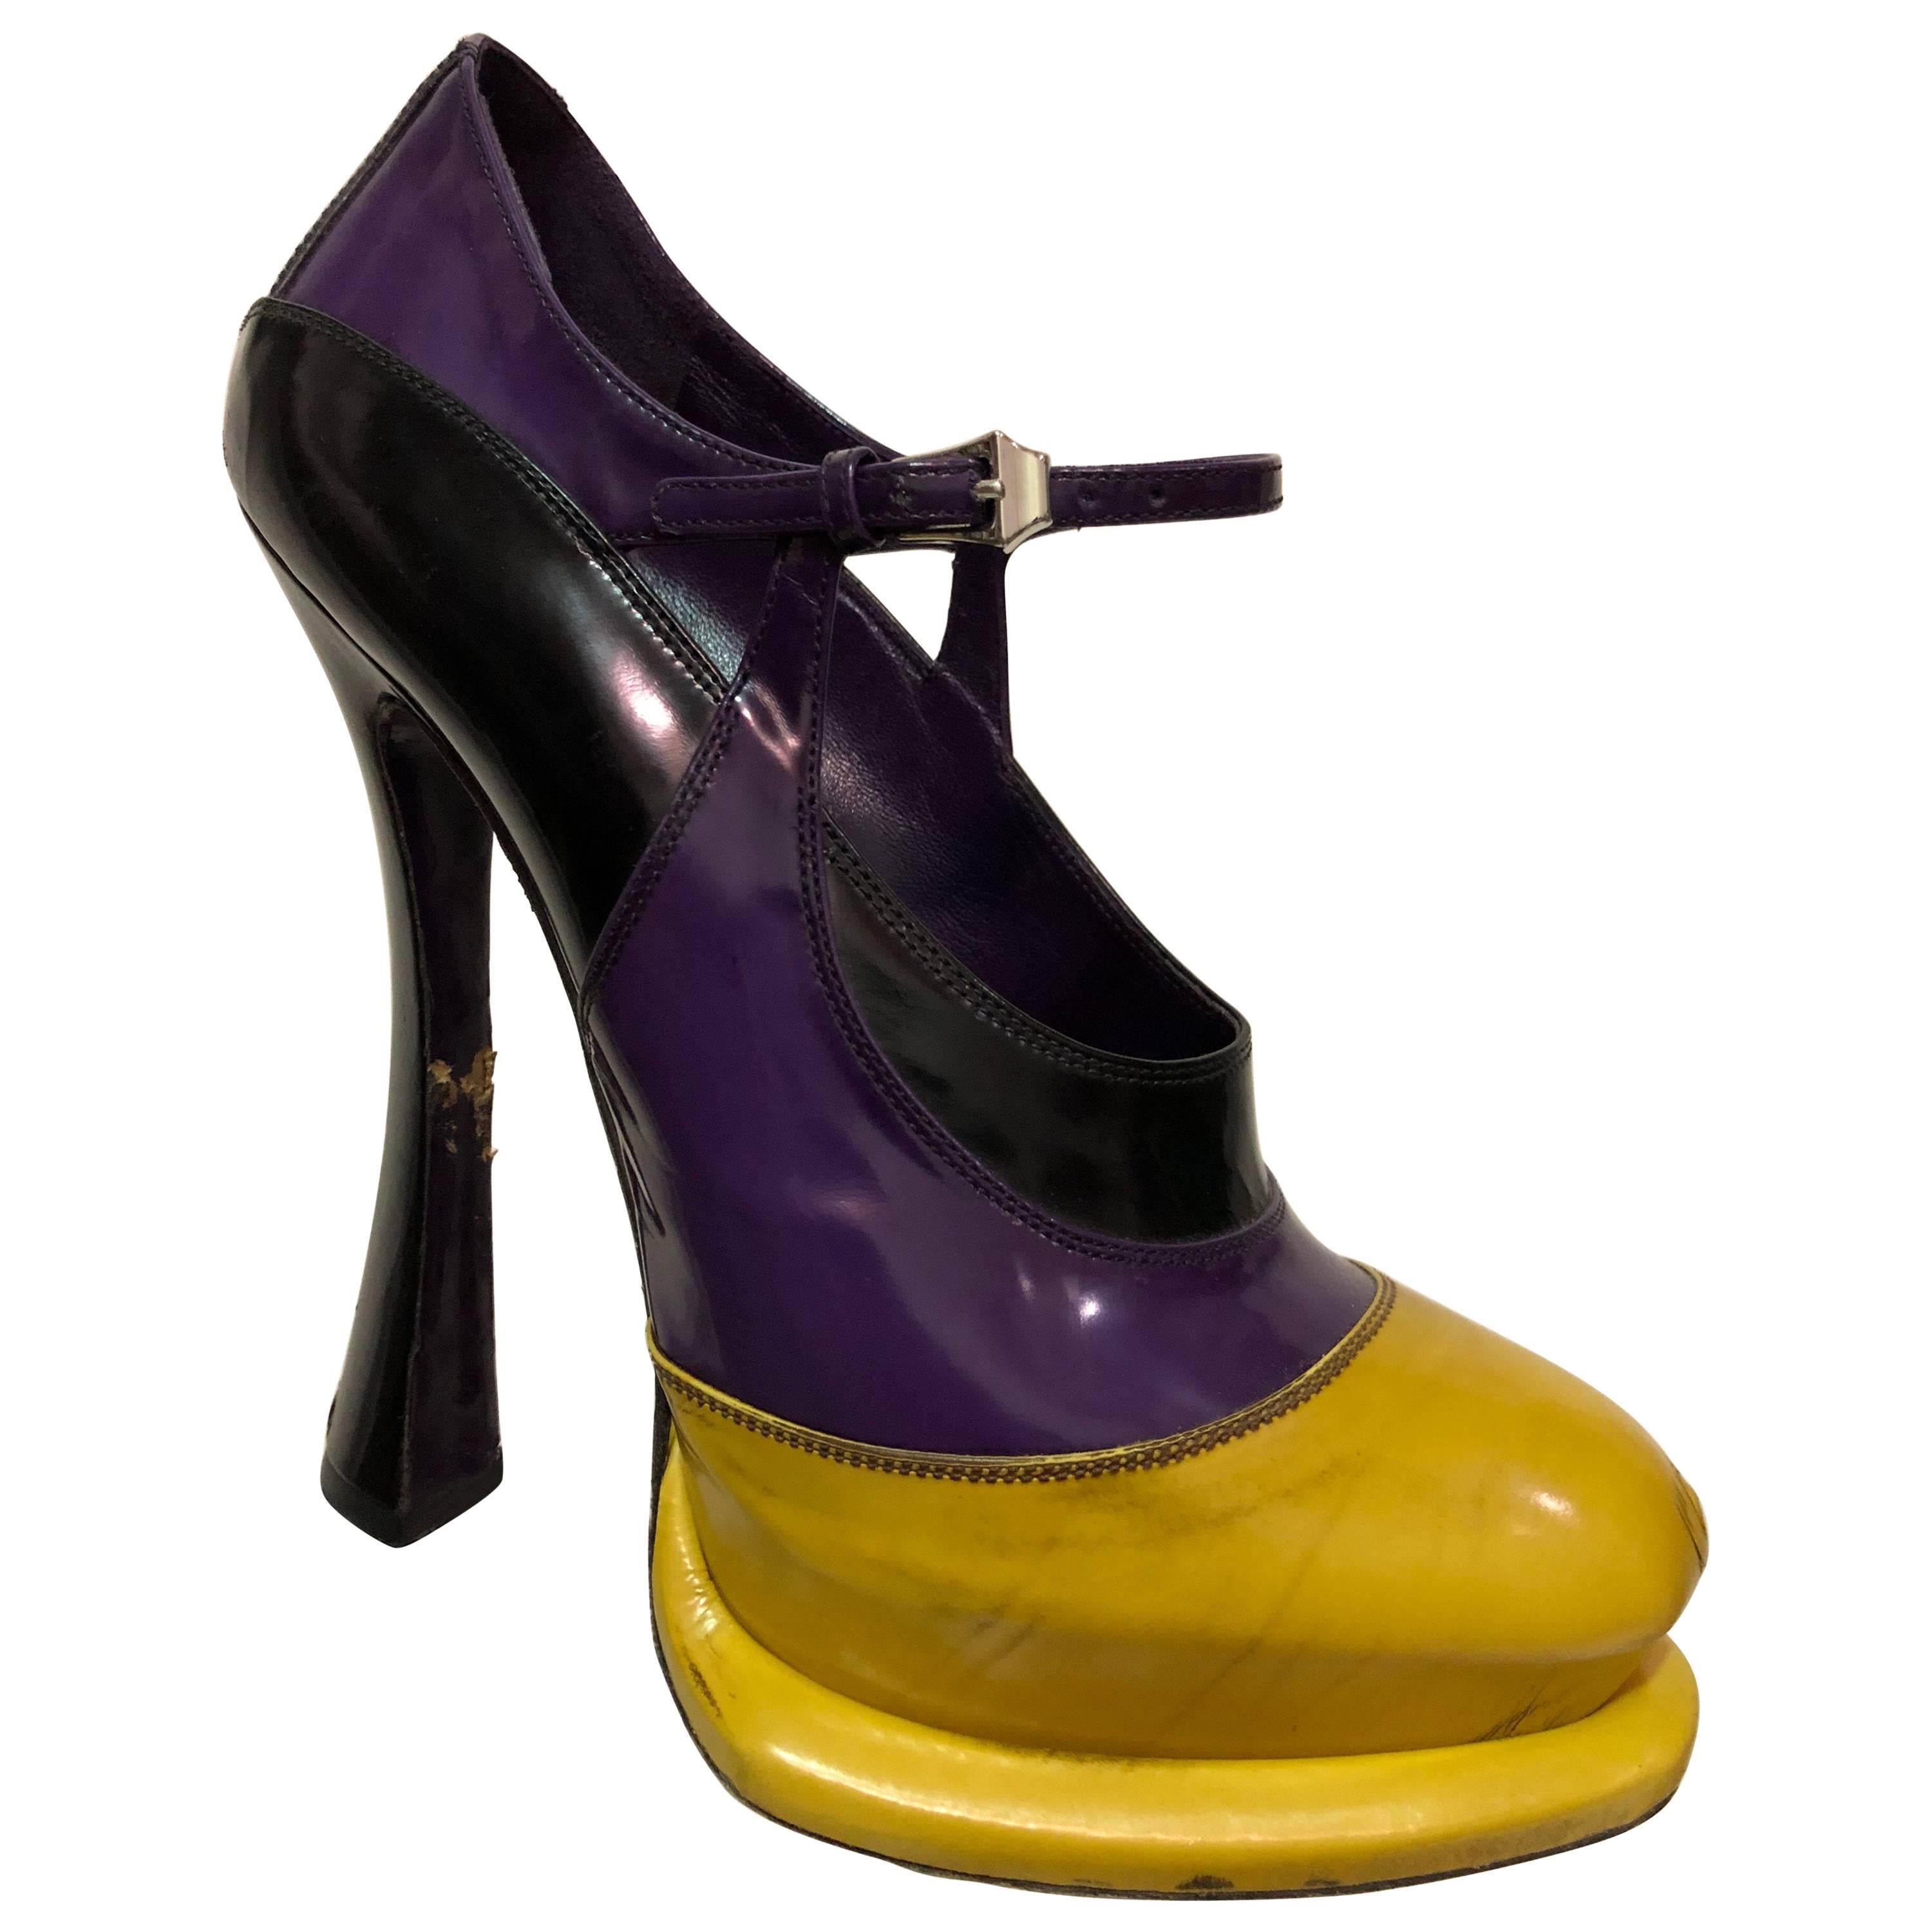 Prada Canary Yellow Purple & Black Fetish-Style Platform Mary Jane Heels